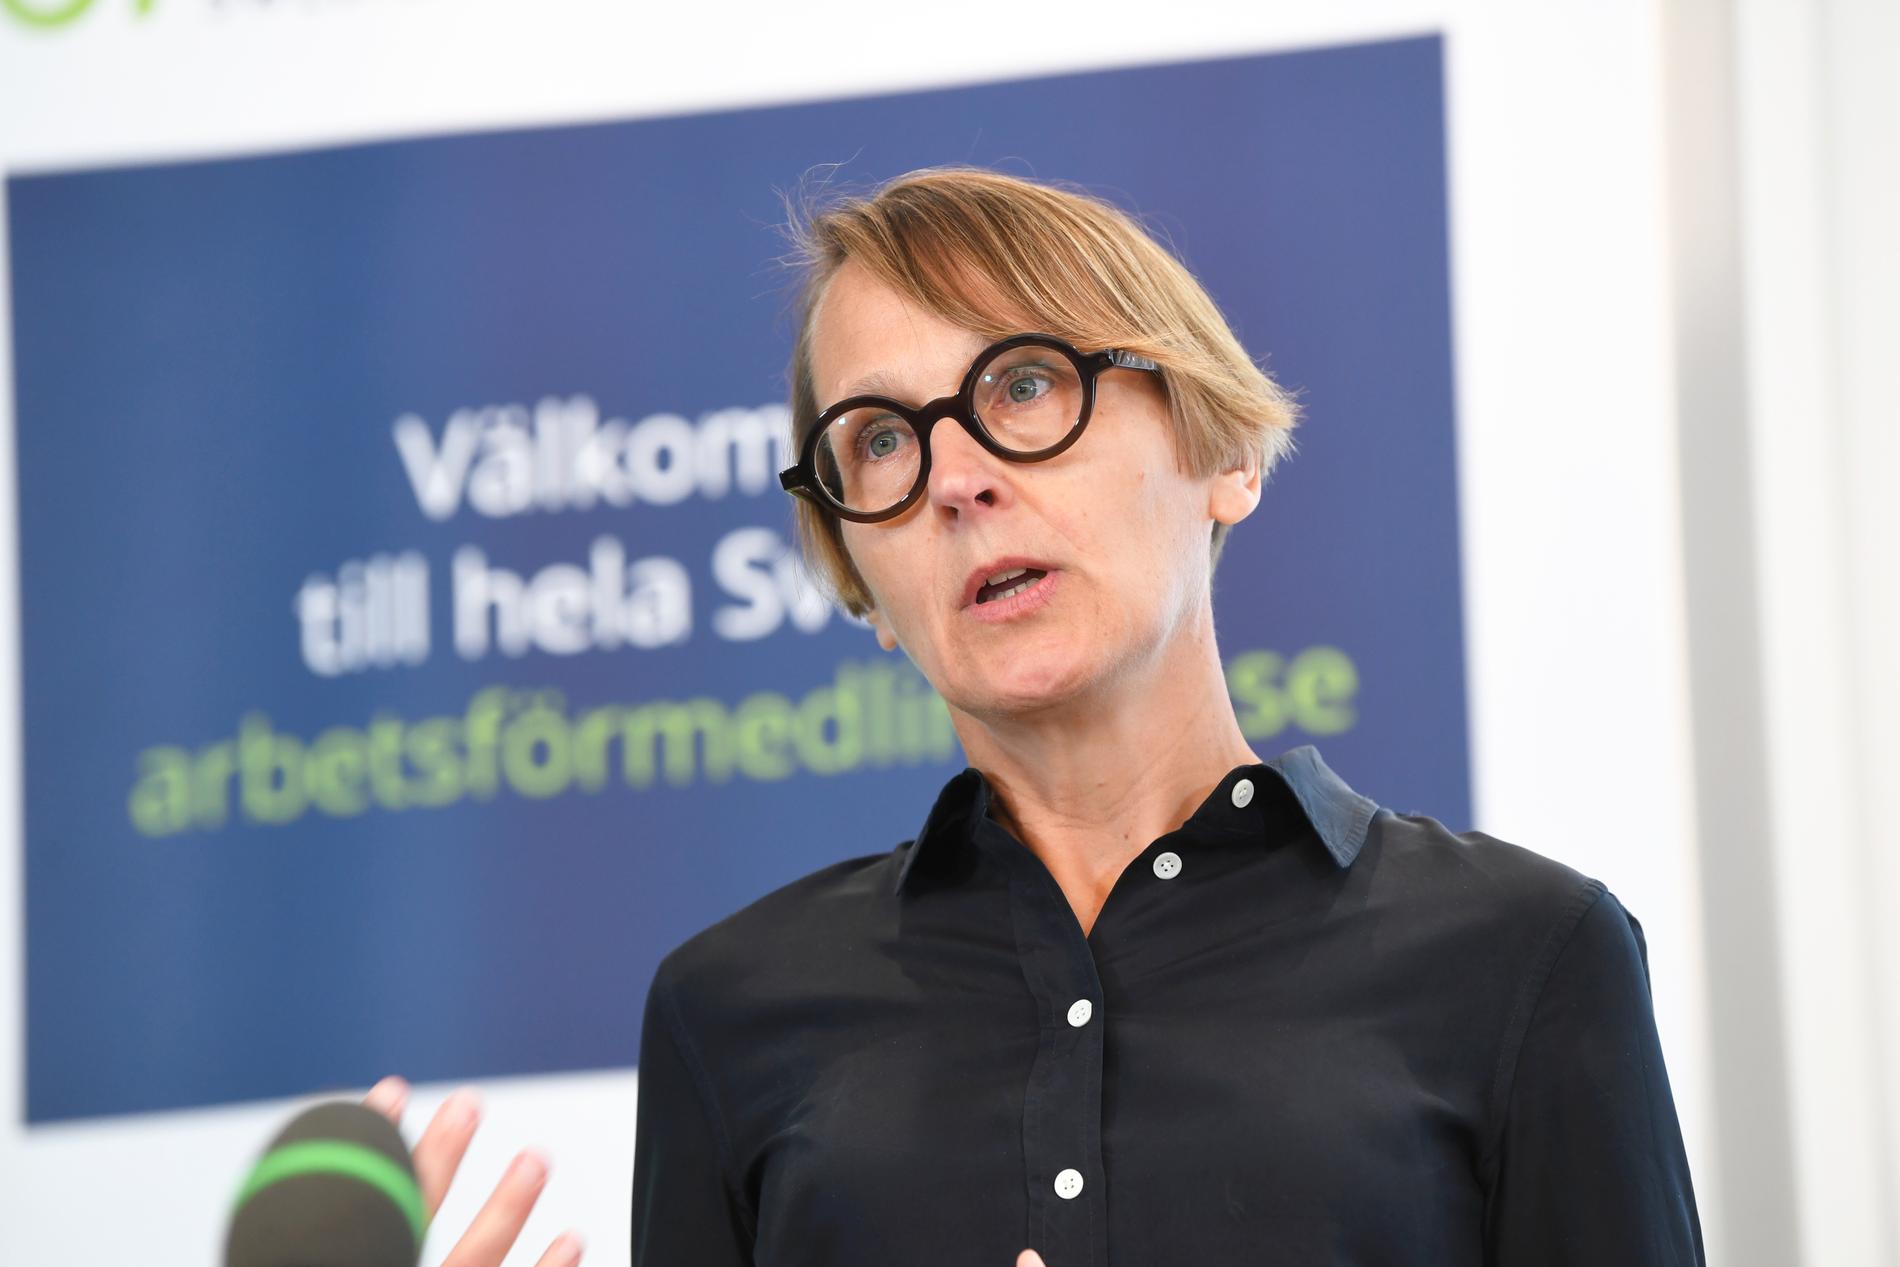 Arbetsförmedlingens analyschef Annika Sundén. Arkivbild.